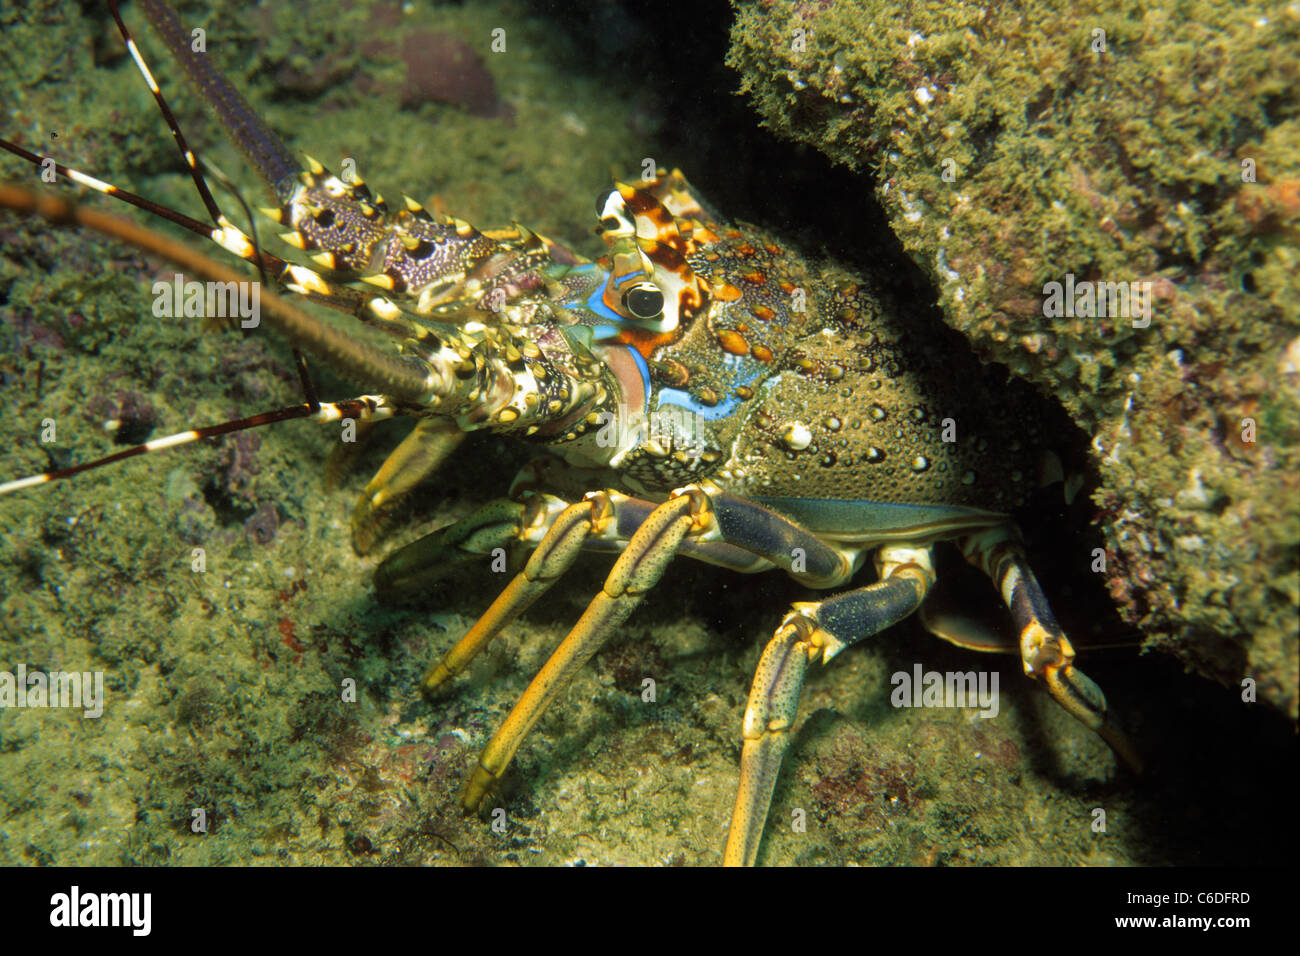 Kamm-Languste, Panulirus homarus, Scalloped spiny lobster, Panulirus homarus, Stock Photo